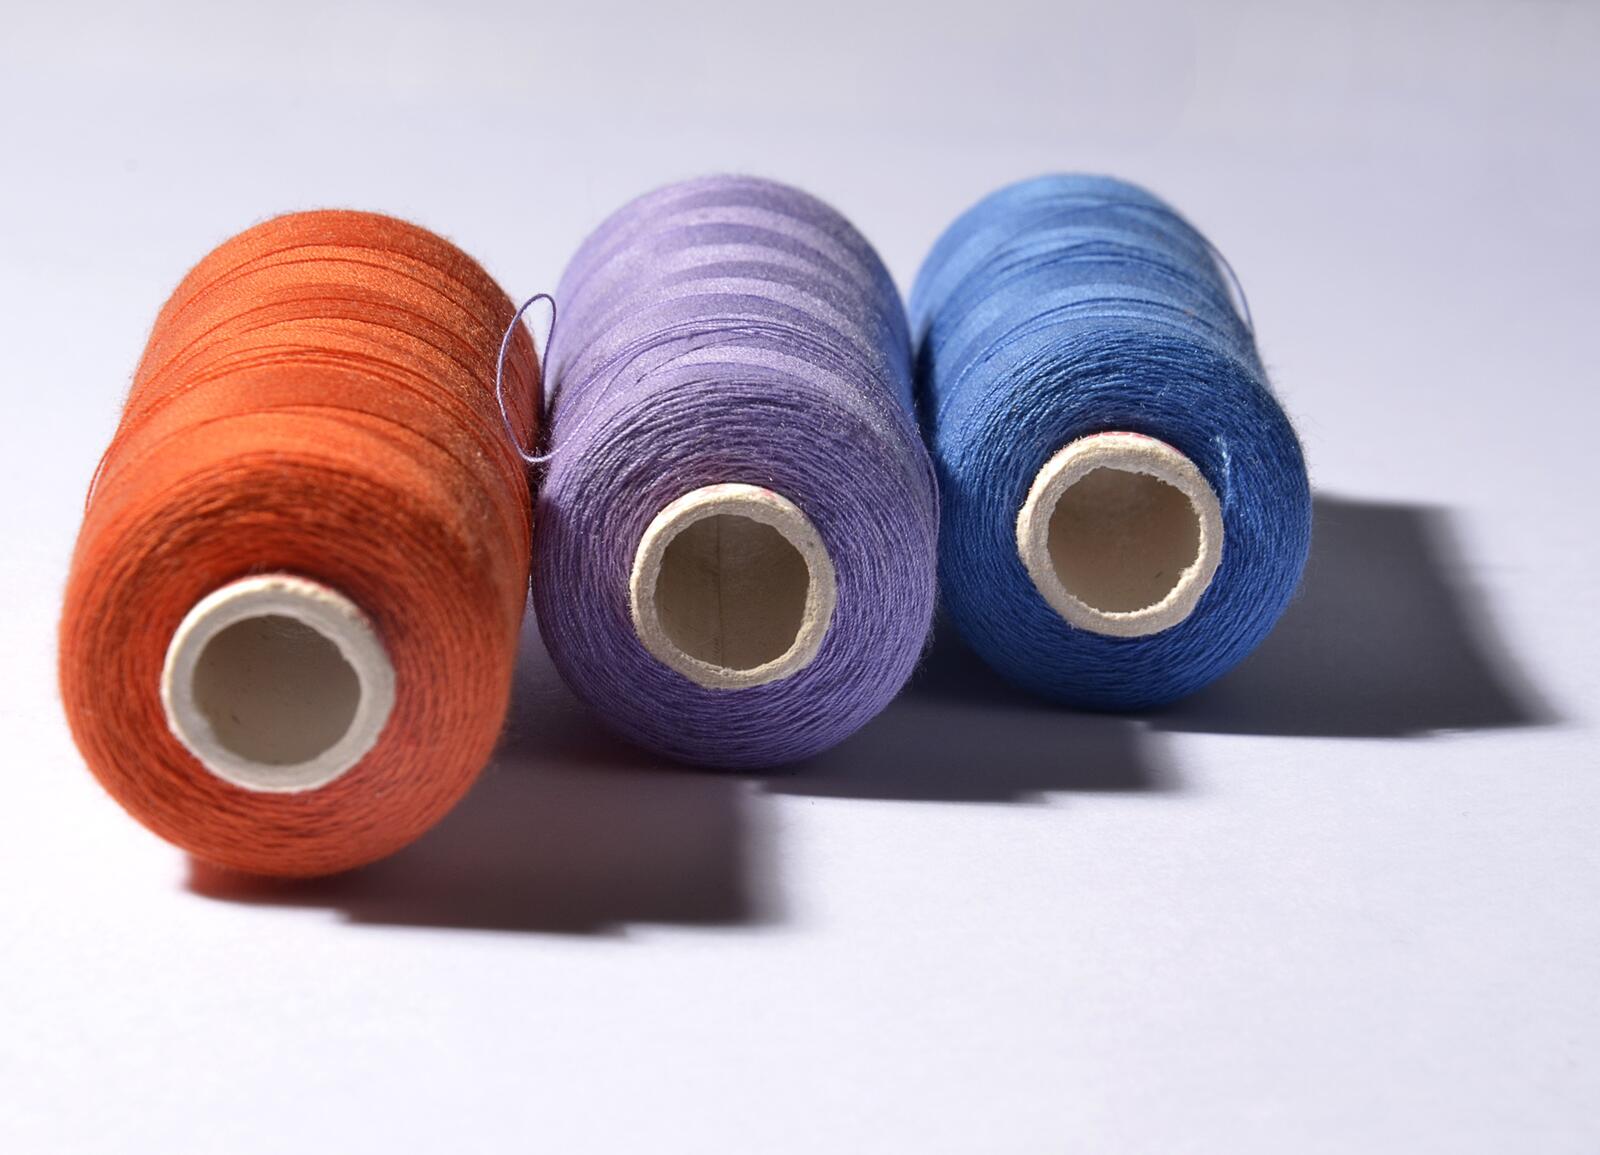 Wallpapers spool of thread wool yarn on the desktop